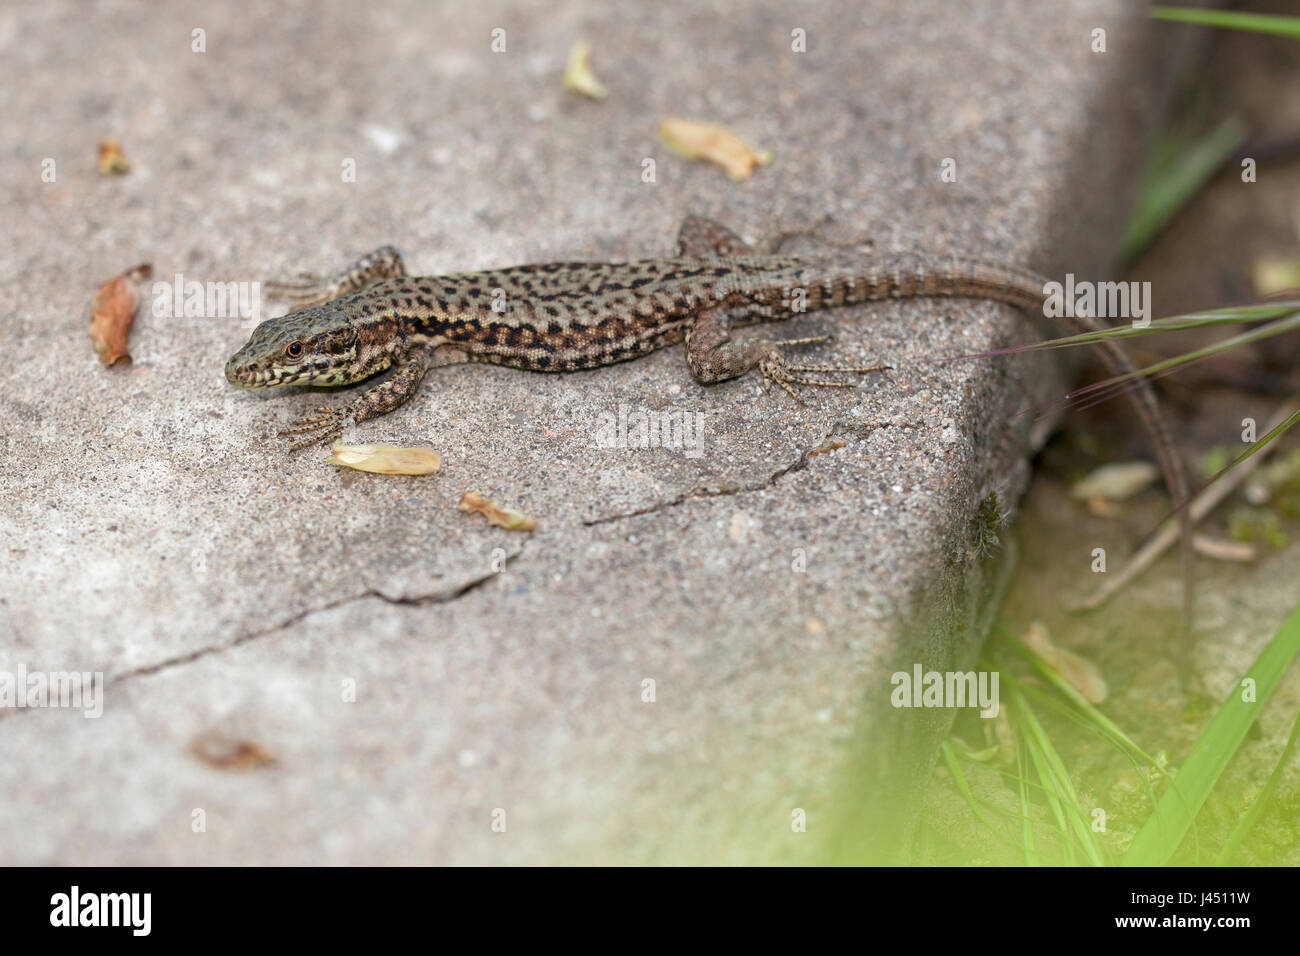 common wall lizard on stone in garden Stock Photo